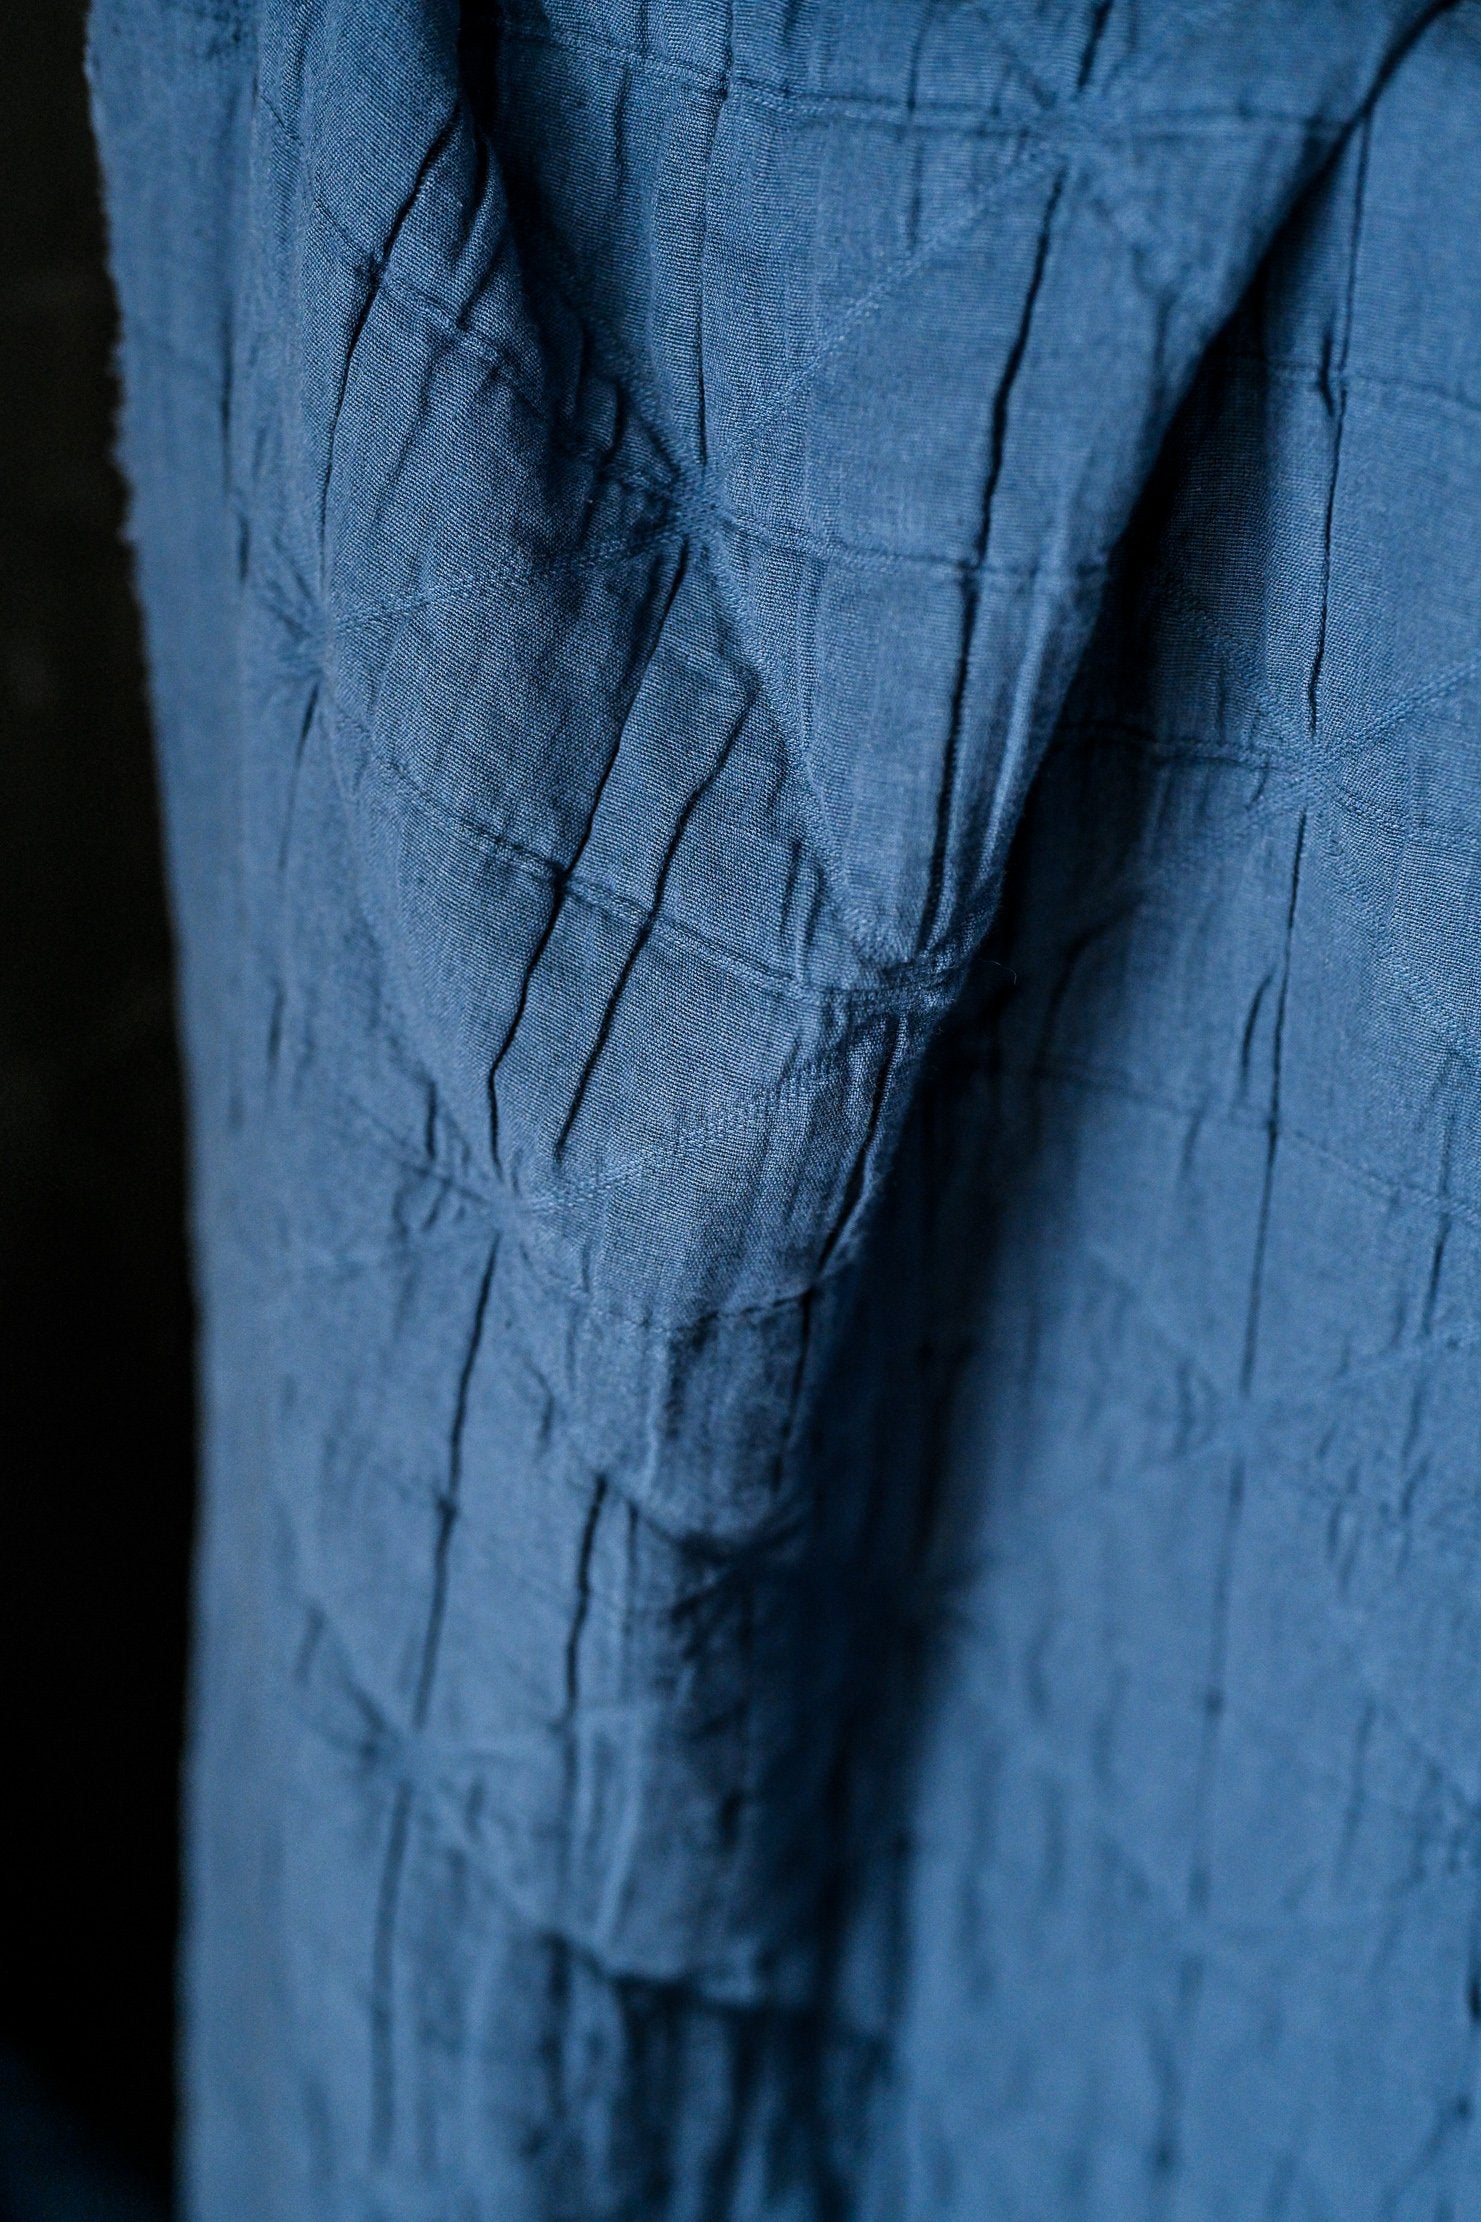 marine blue jacquard fabric in a light grey background